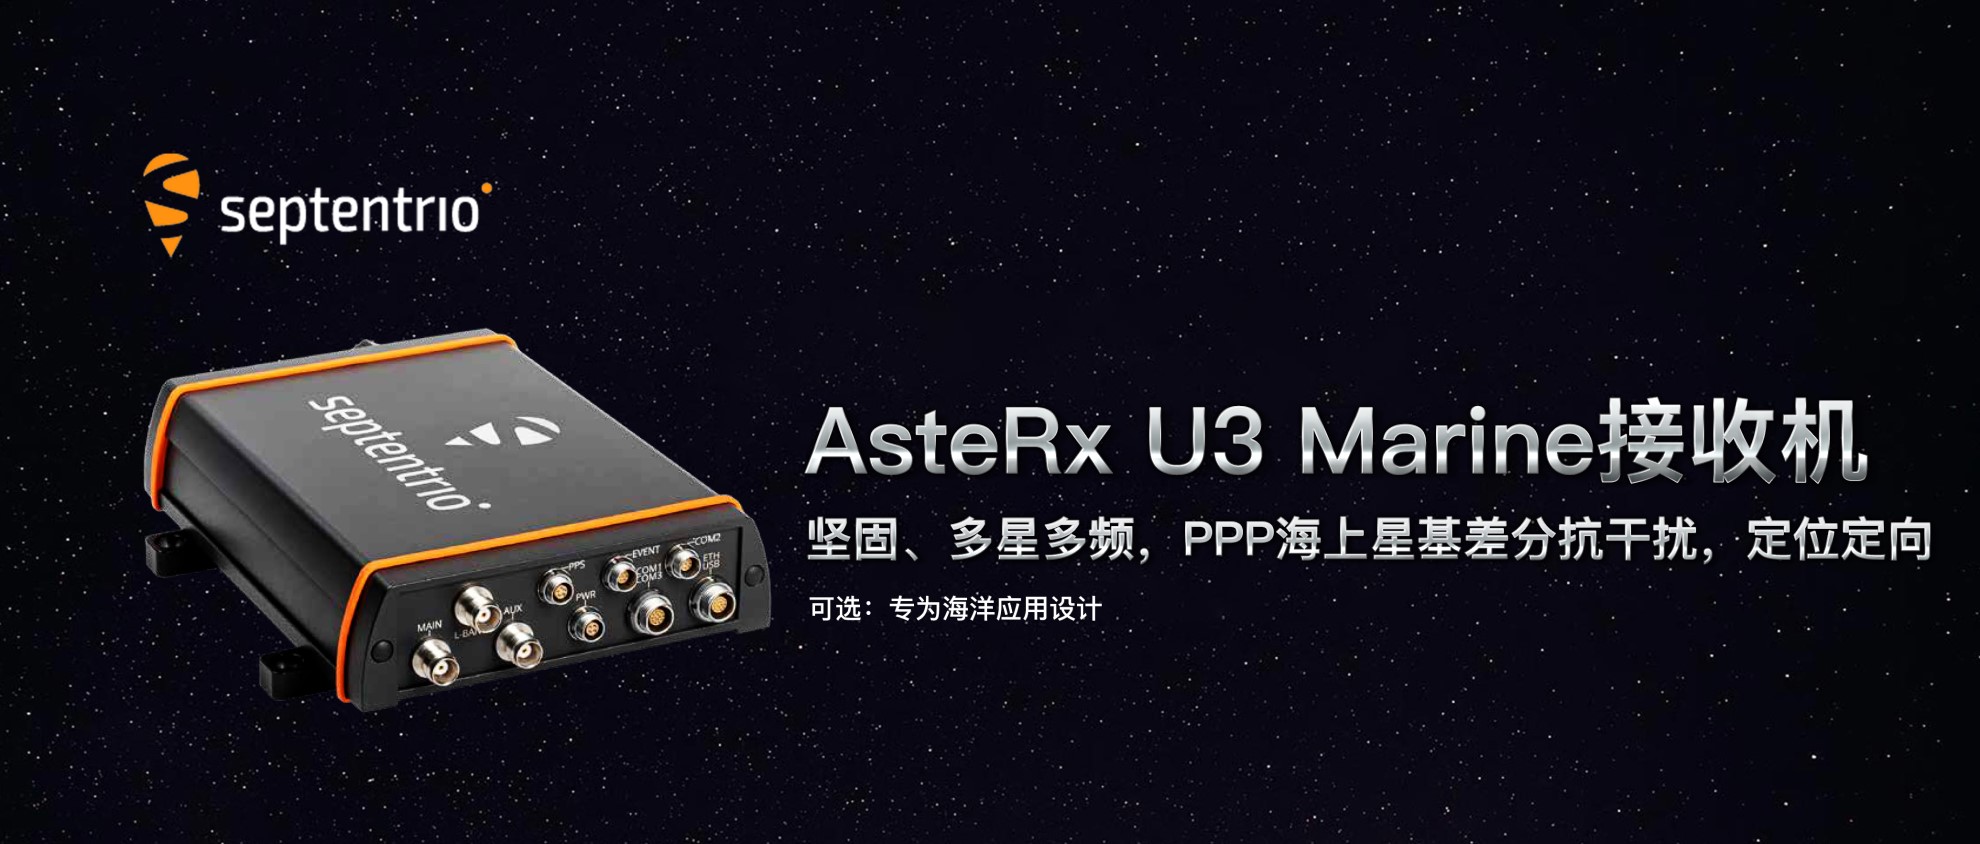 septentrio-AsteRx U3 Marine-南京宏成智能科技有限公司-septentrio代理商-polarx5s-polarx5-mosaic x5-asterx m3-GNSS模组